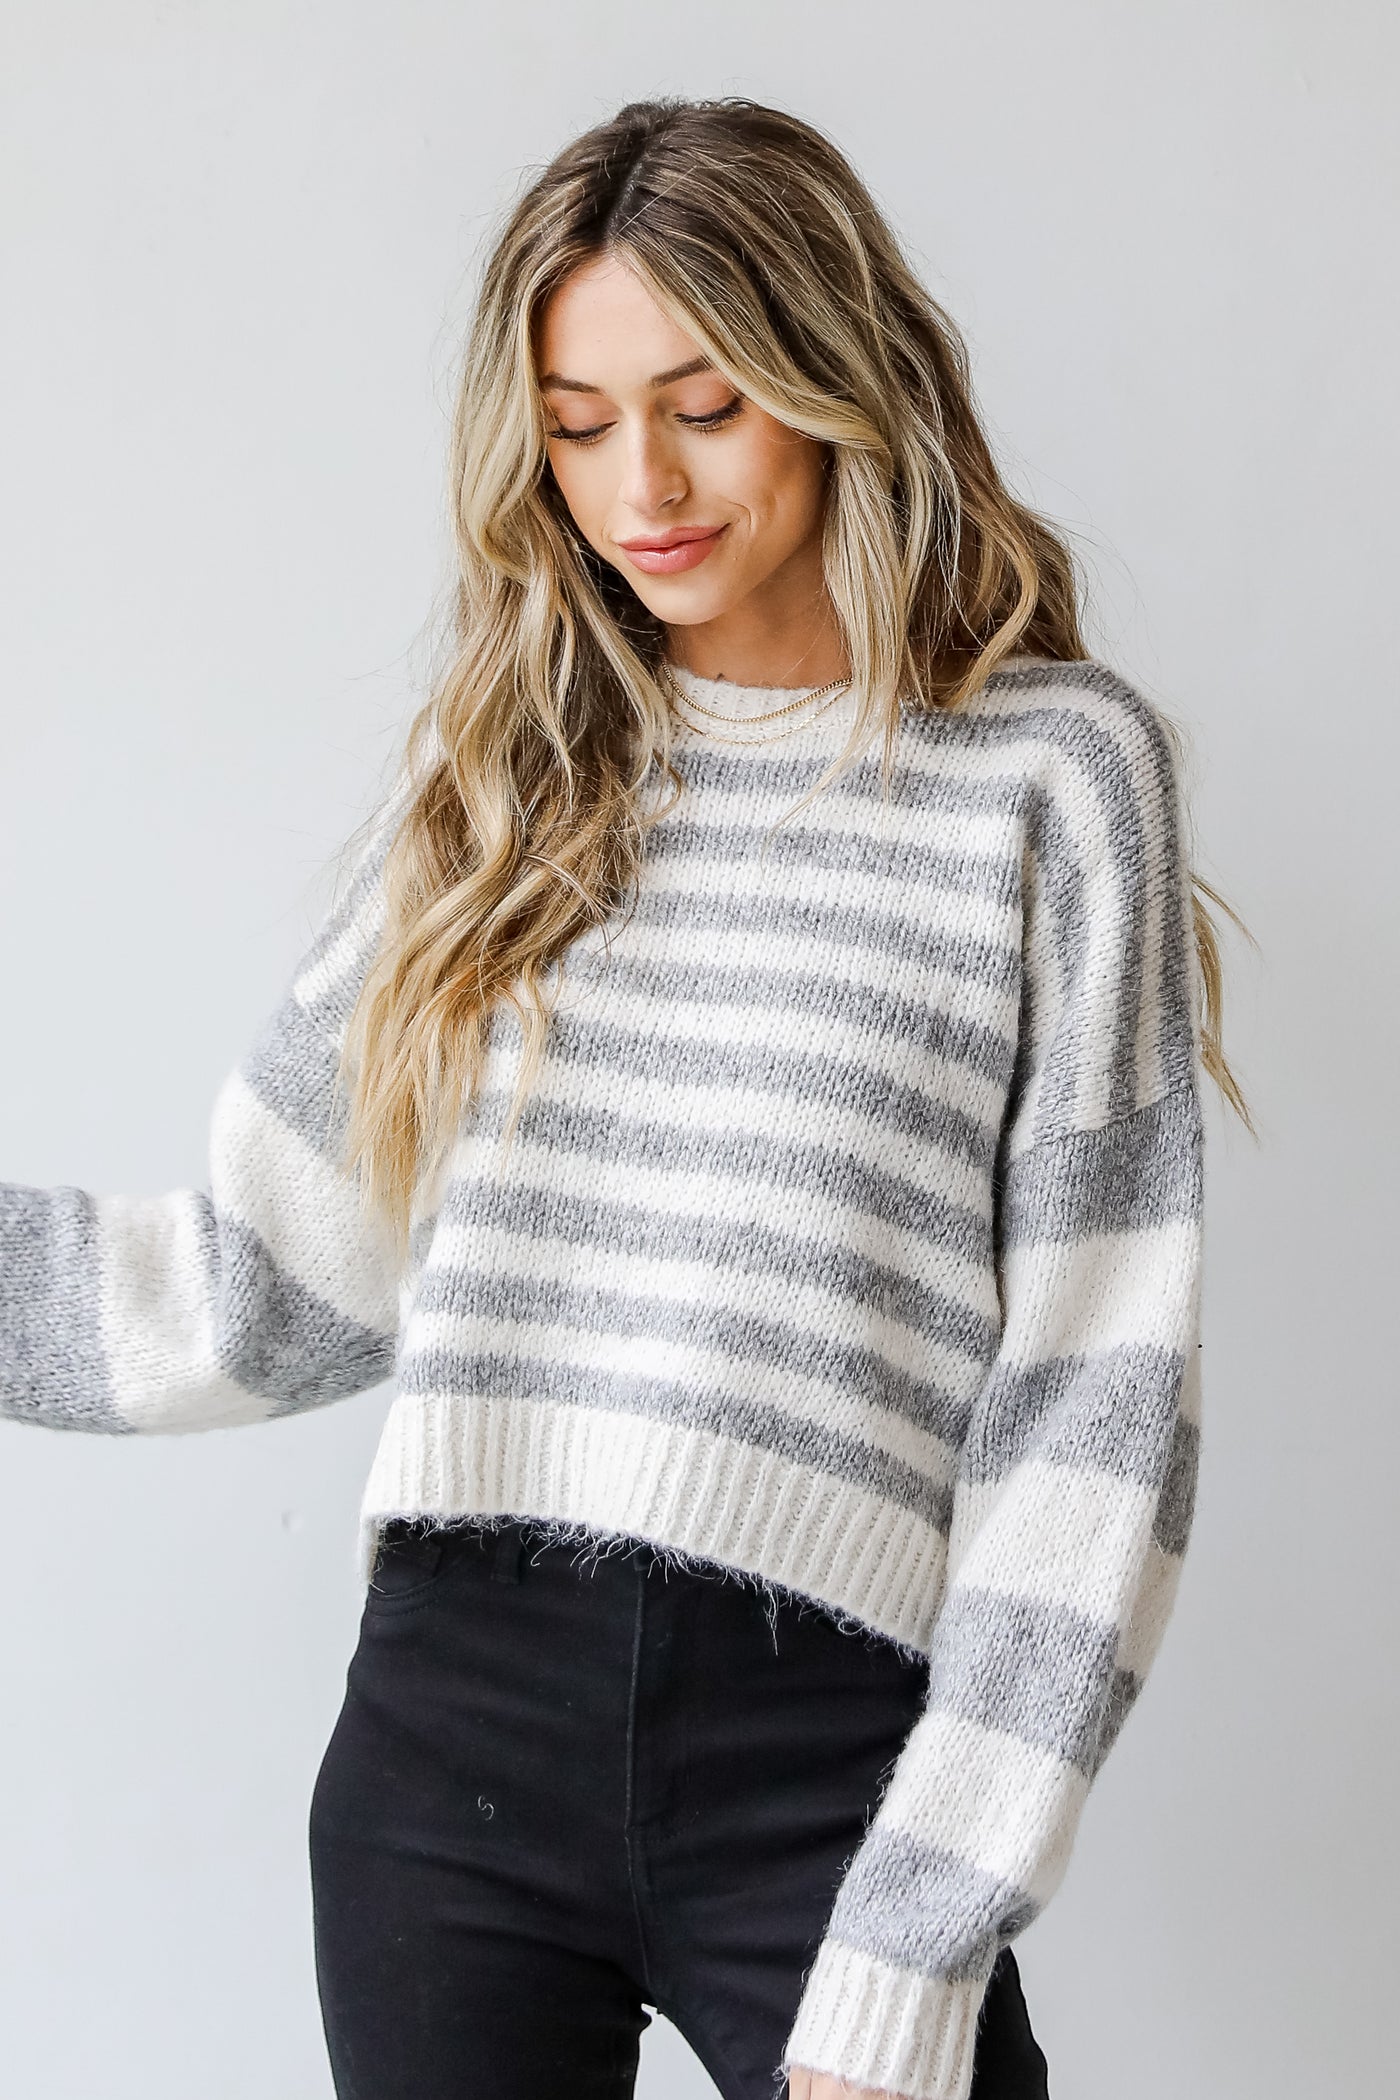 Striped Sweater in heather grey on model